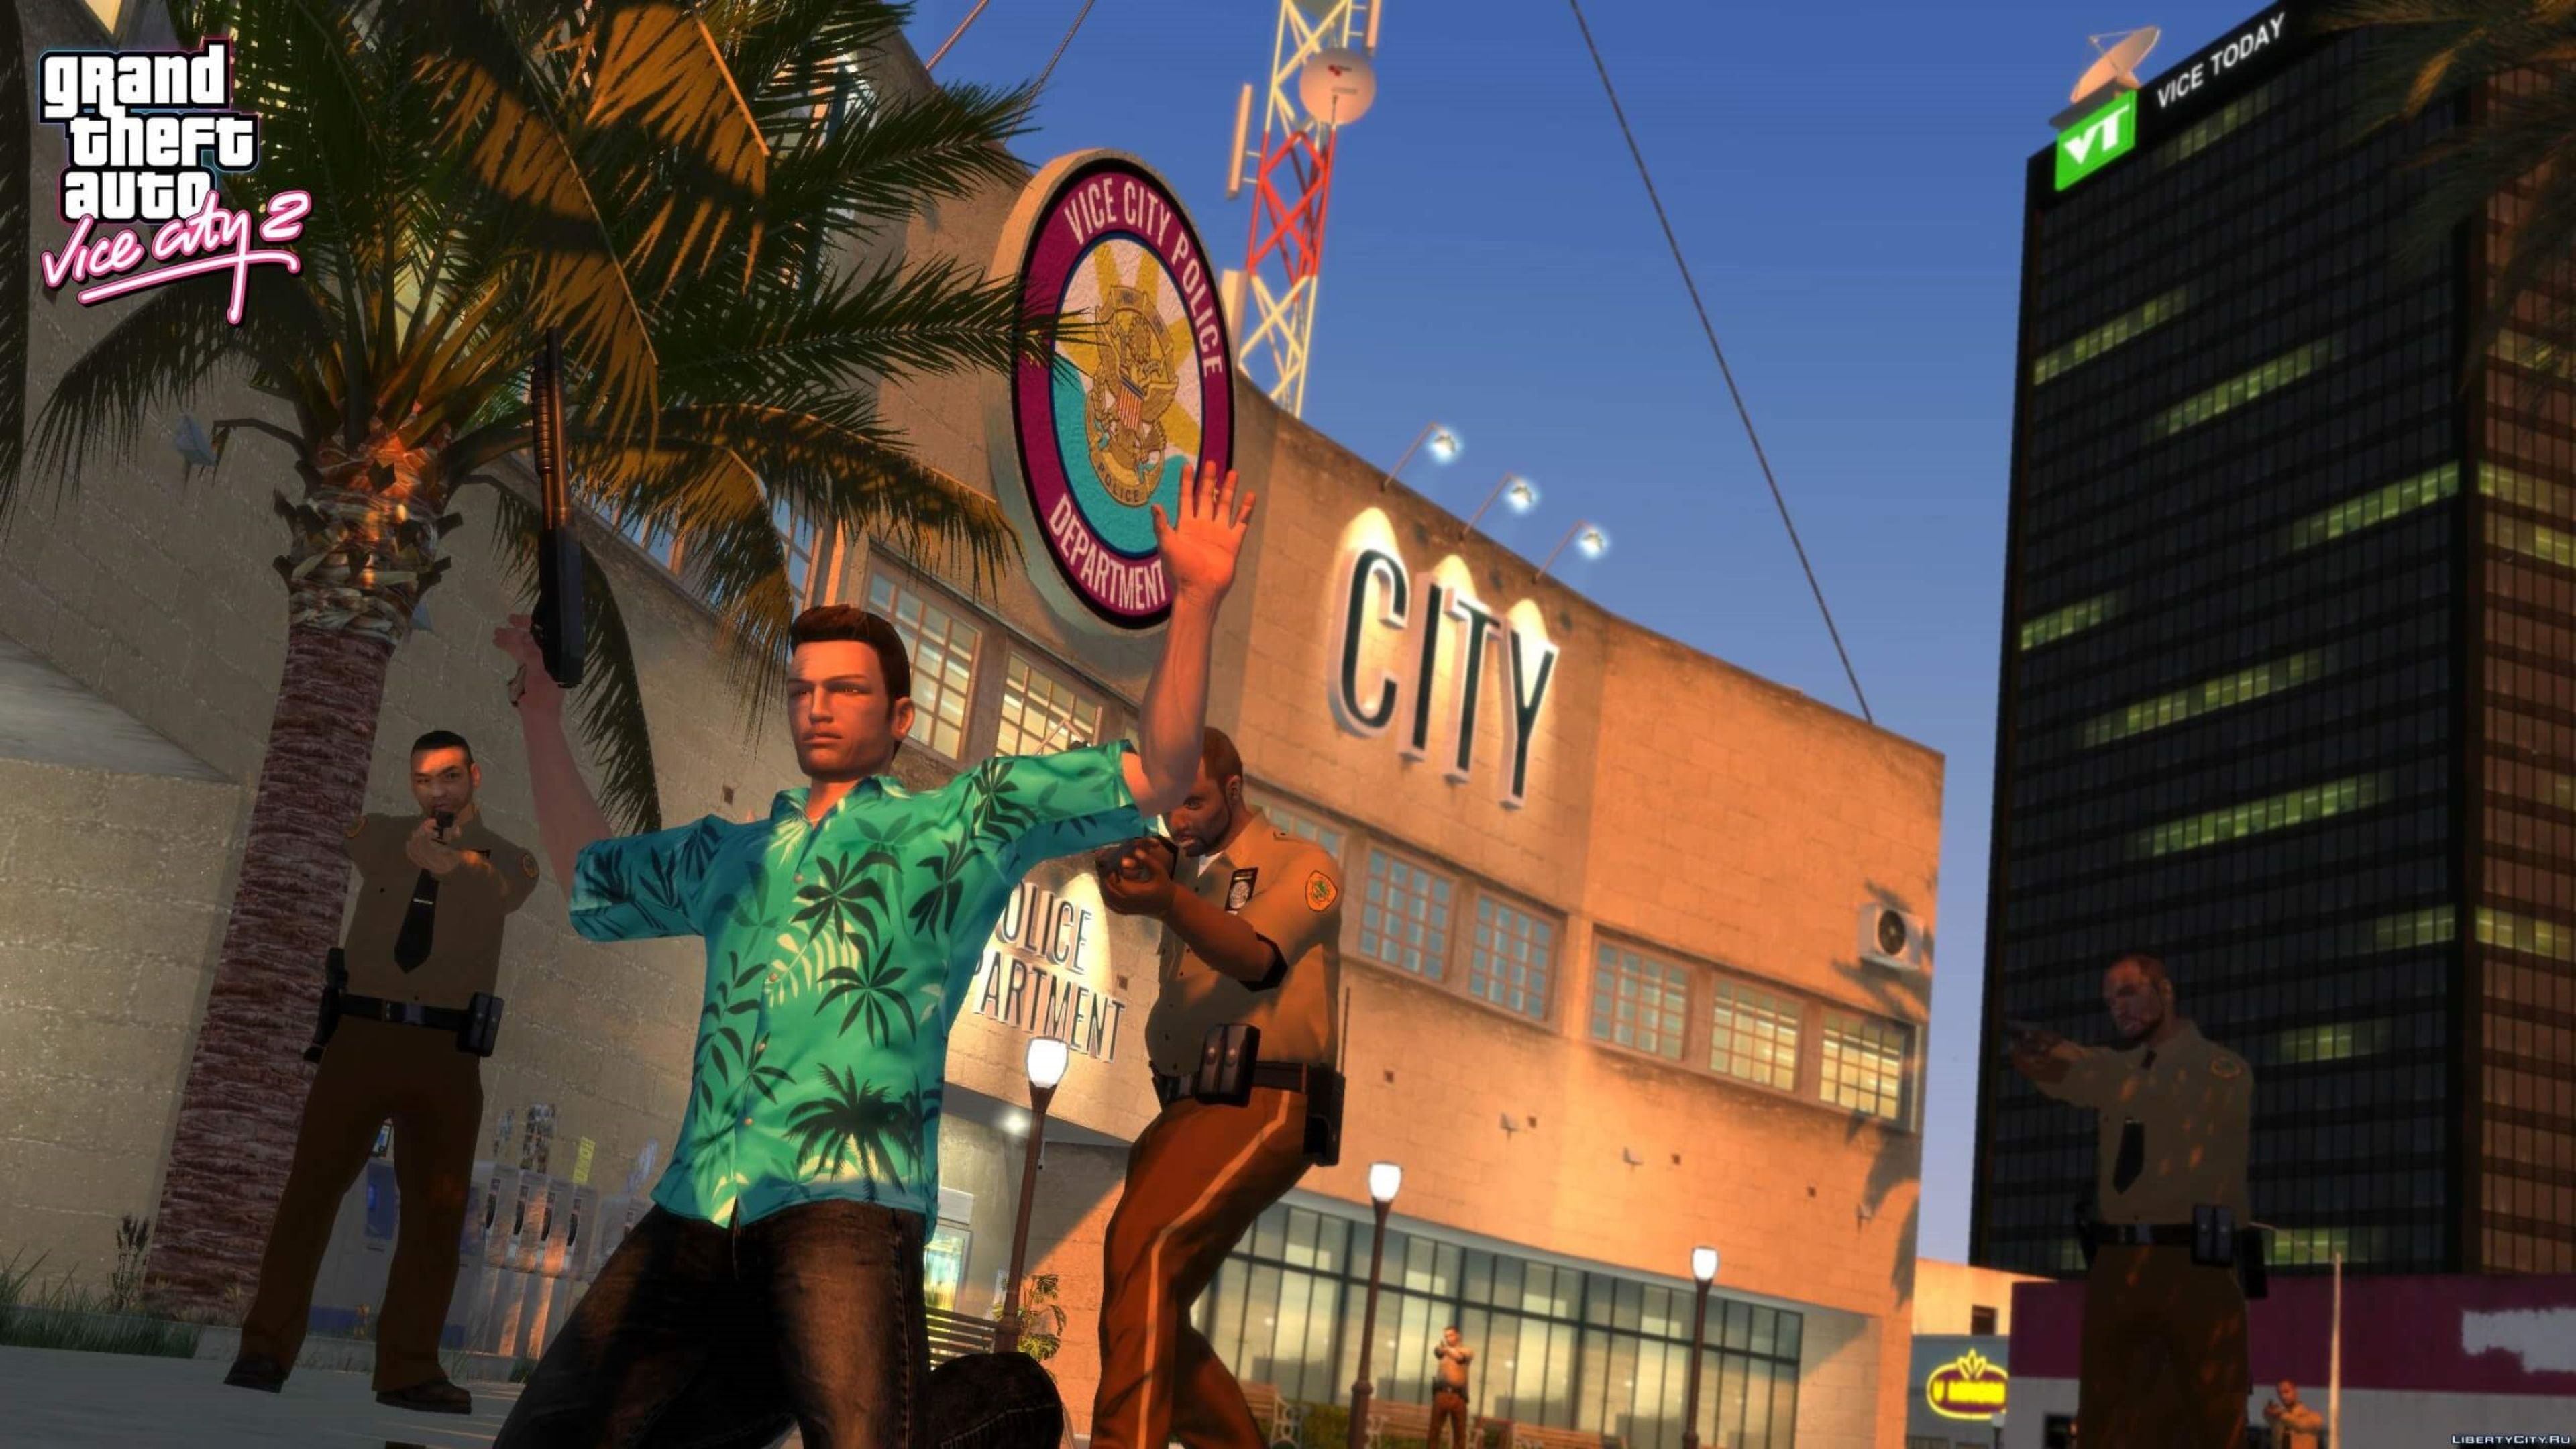 GTA Vice City Remaster - Grand Theft Auto Vice City 2